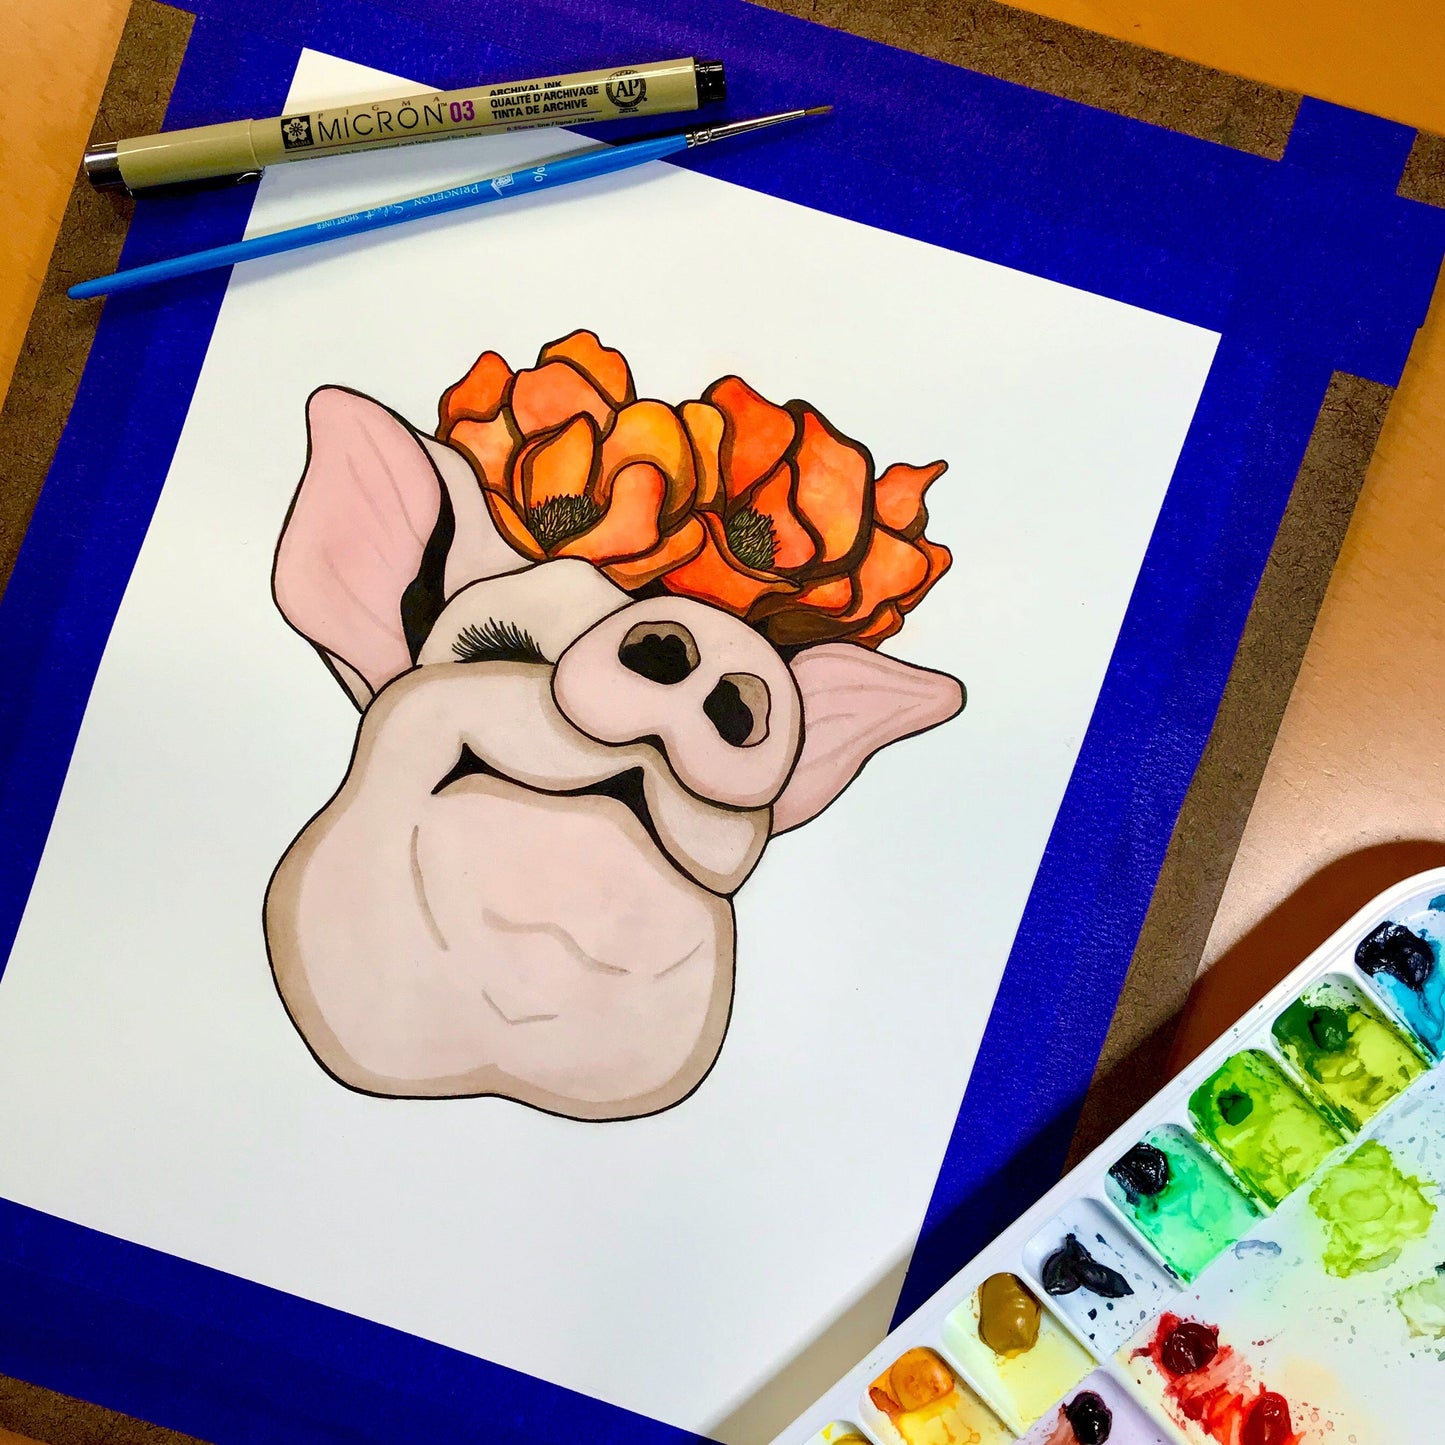 PinkPolish Design Original Art "Poppy Pig" Smile Inspired Original Watercolor & Ink Illustration